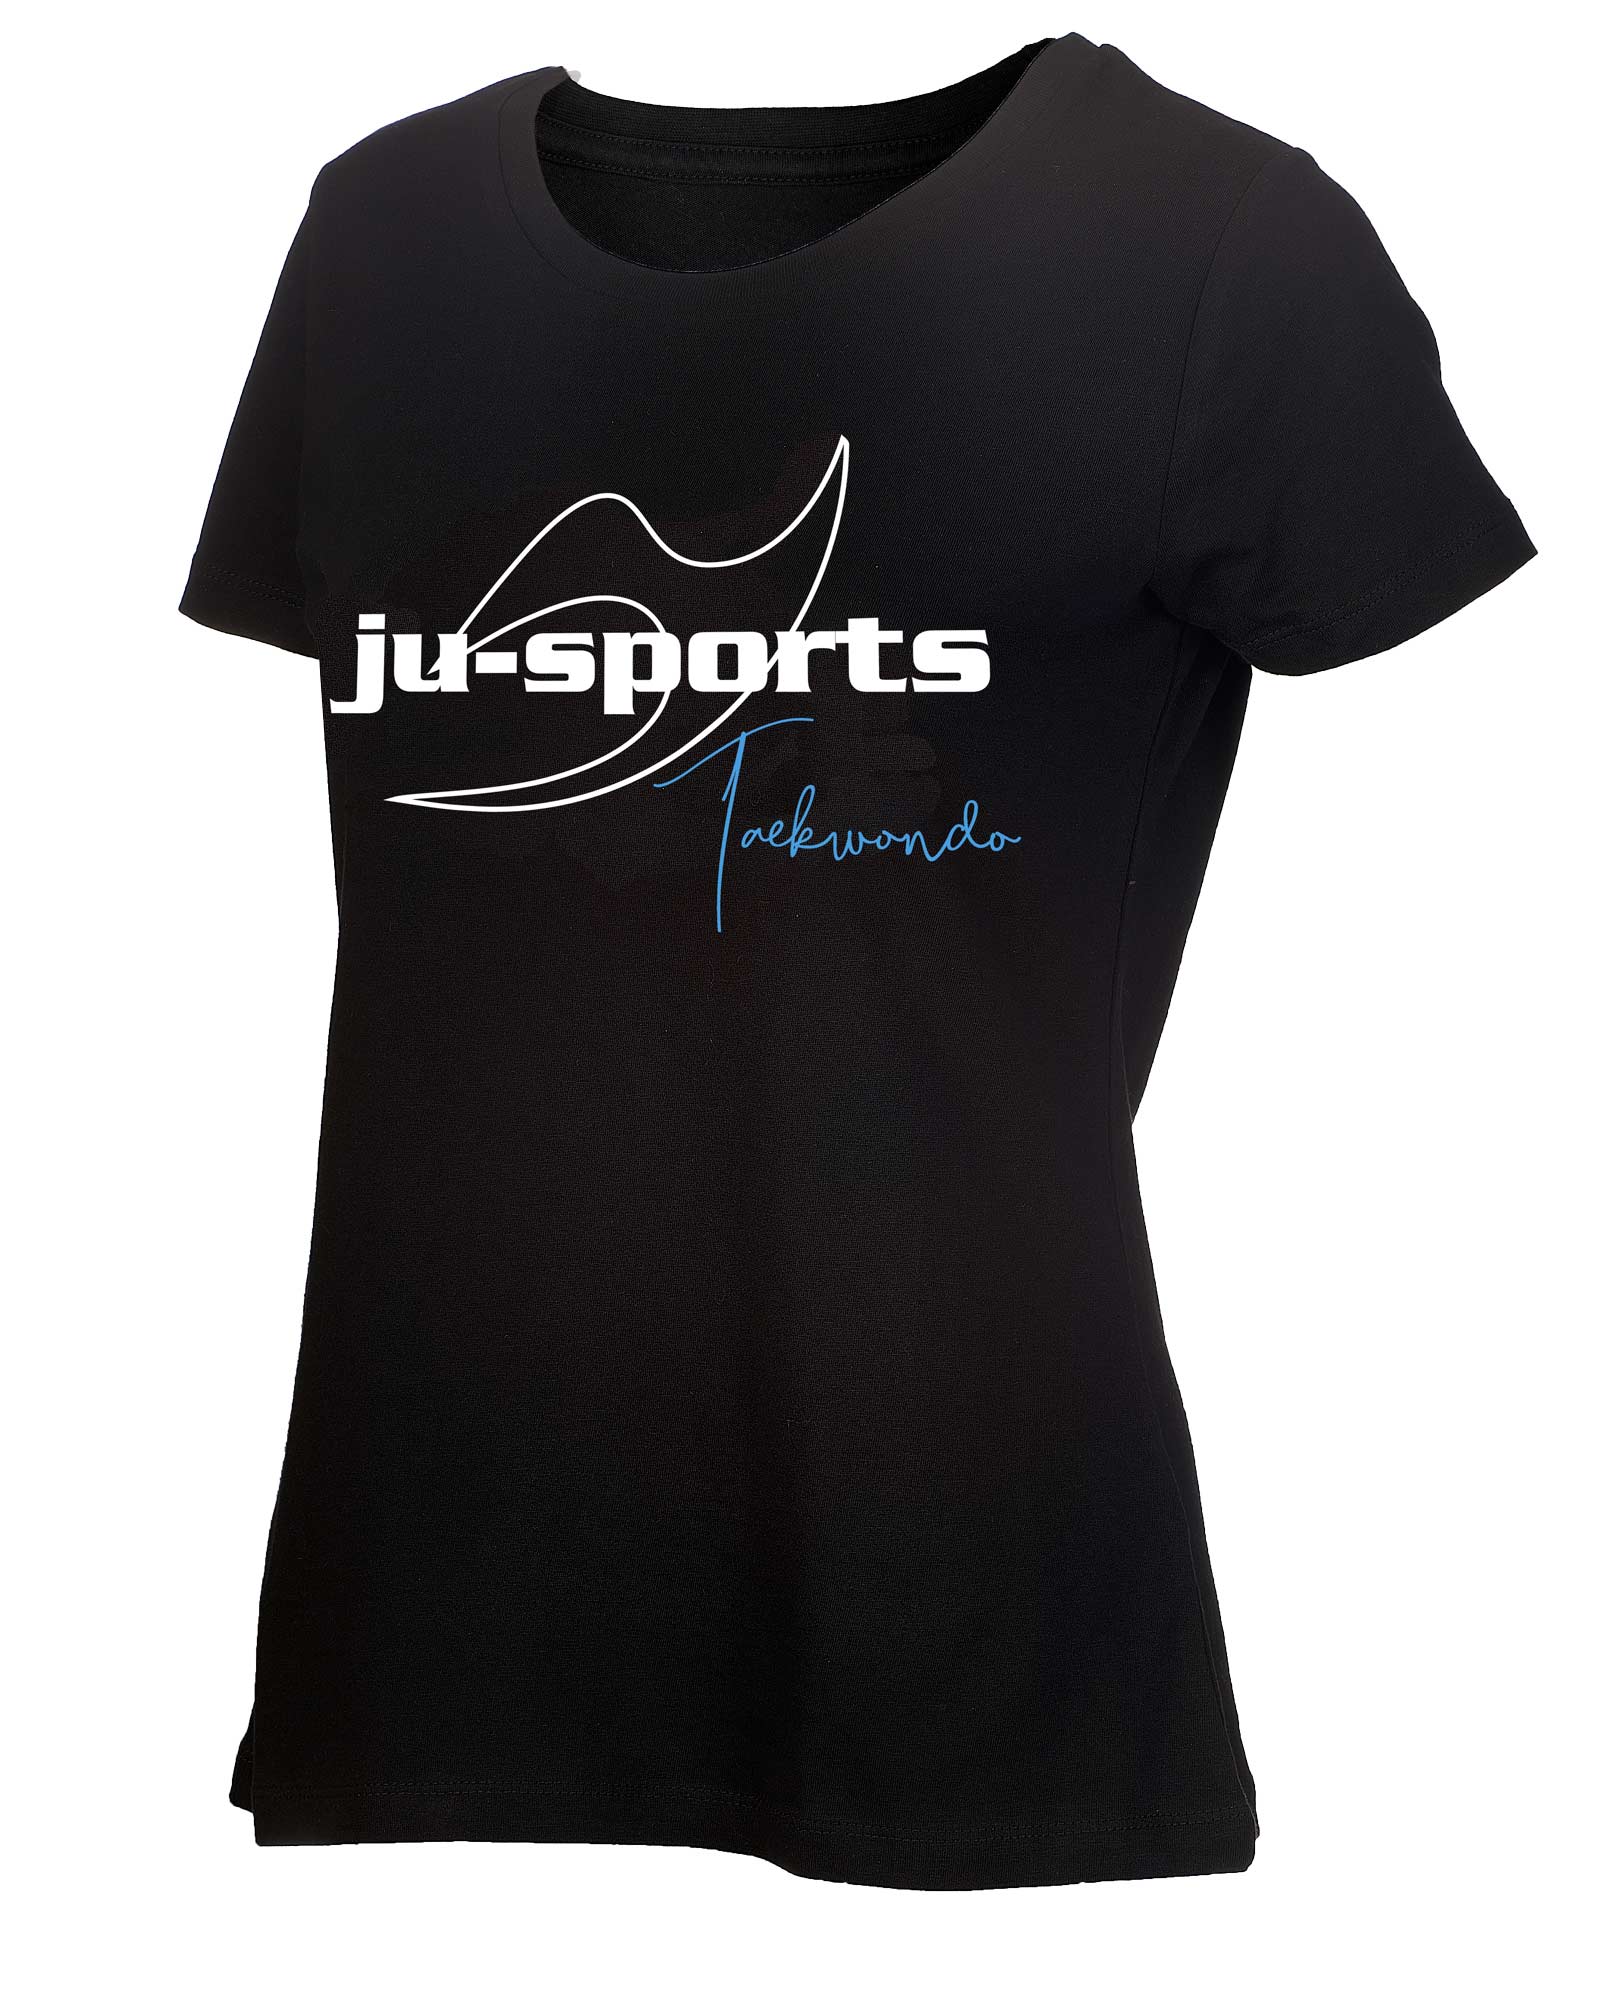 Ju-Sports Signature Line Shirt Taekwondo Lady